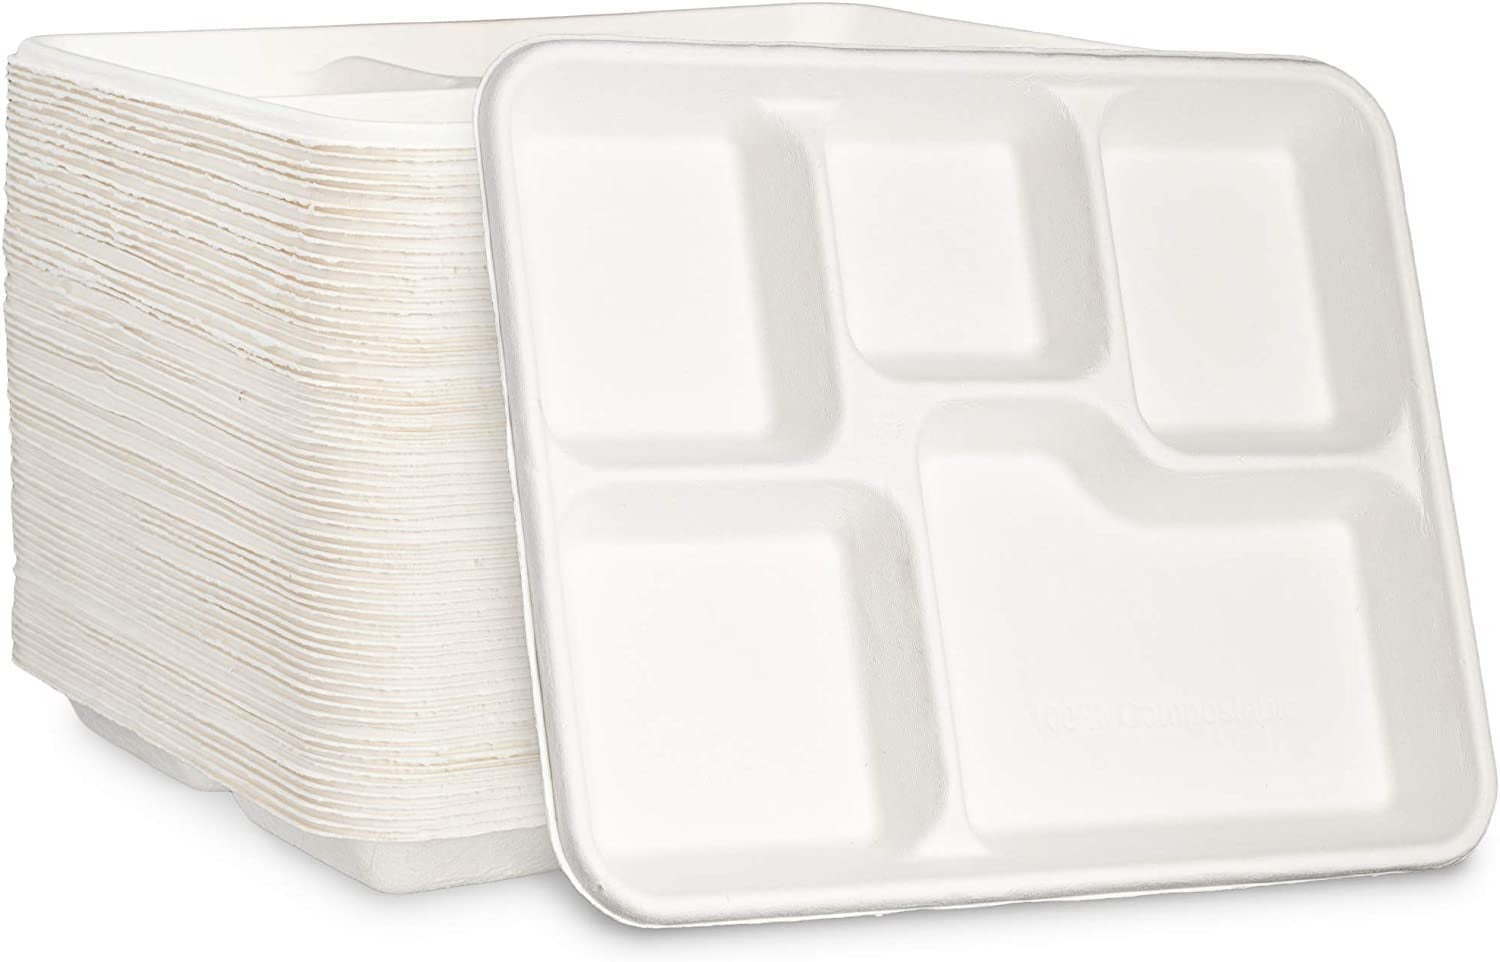 Disposable Plates & Styrofoam Plates